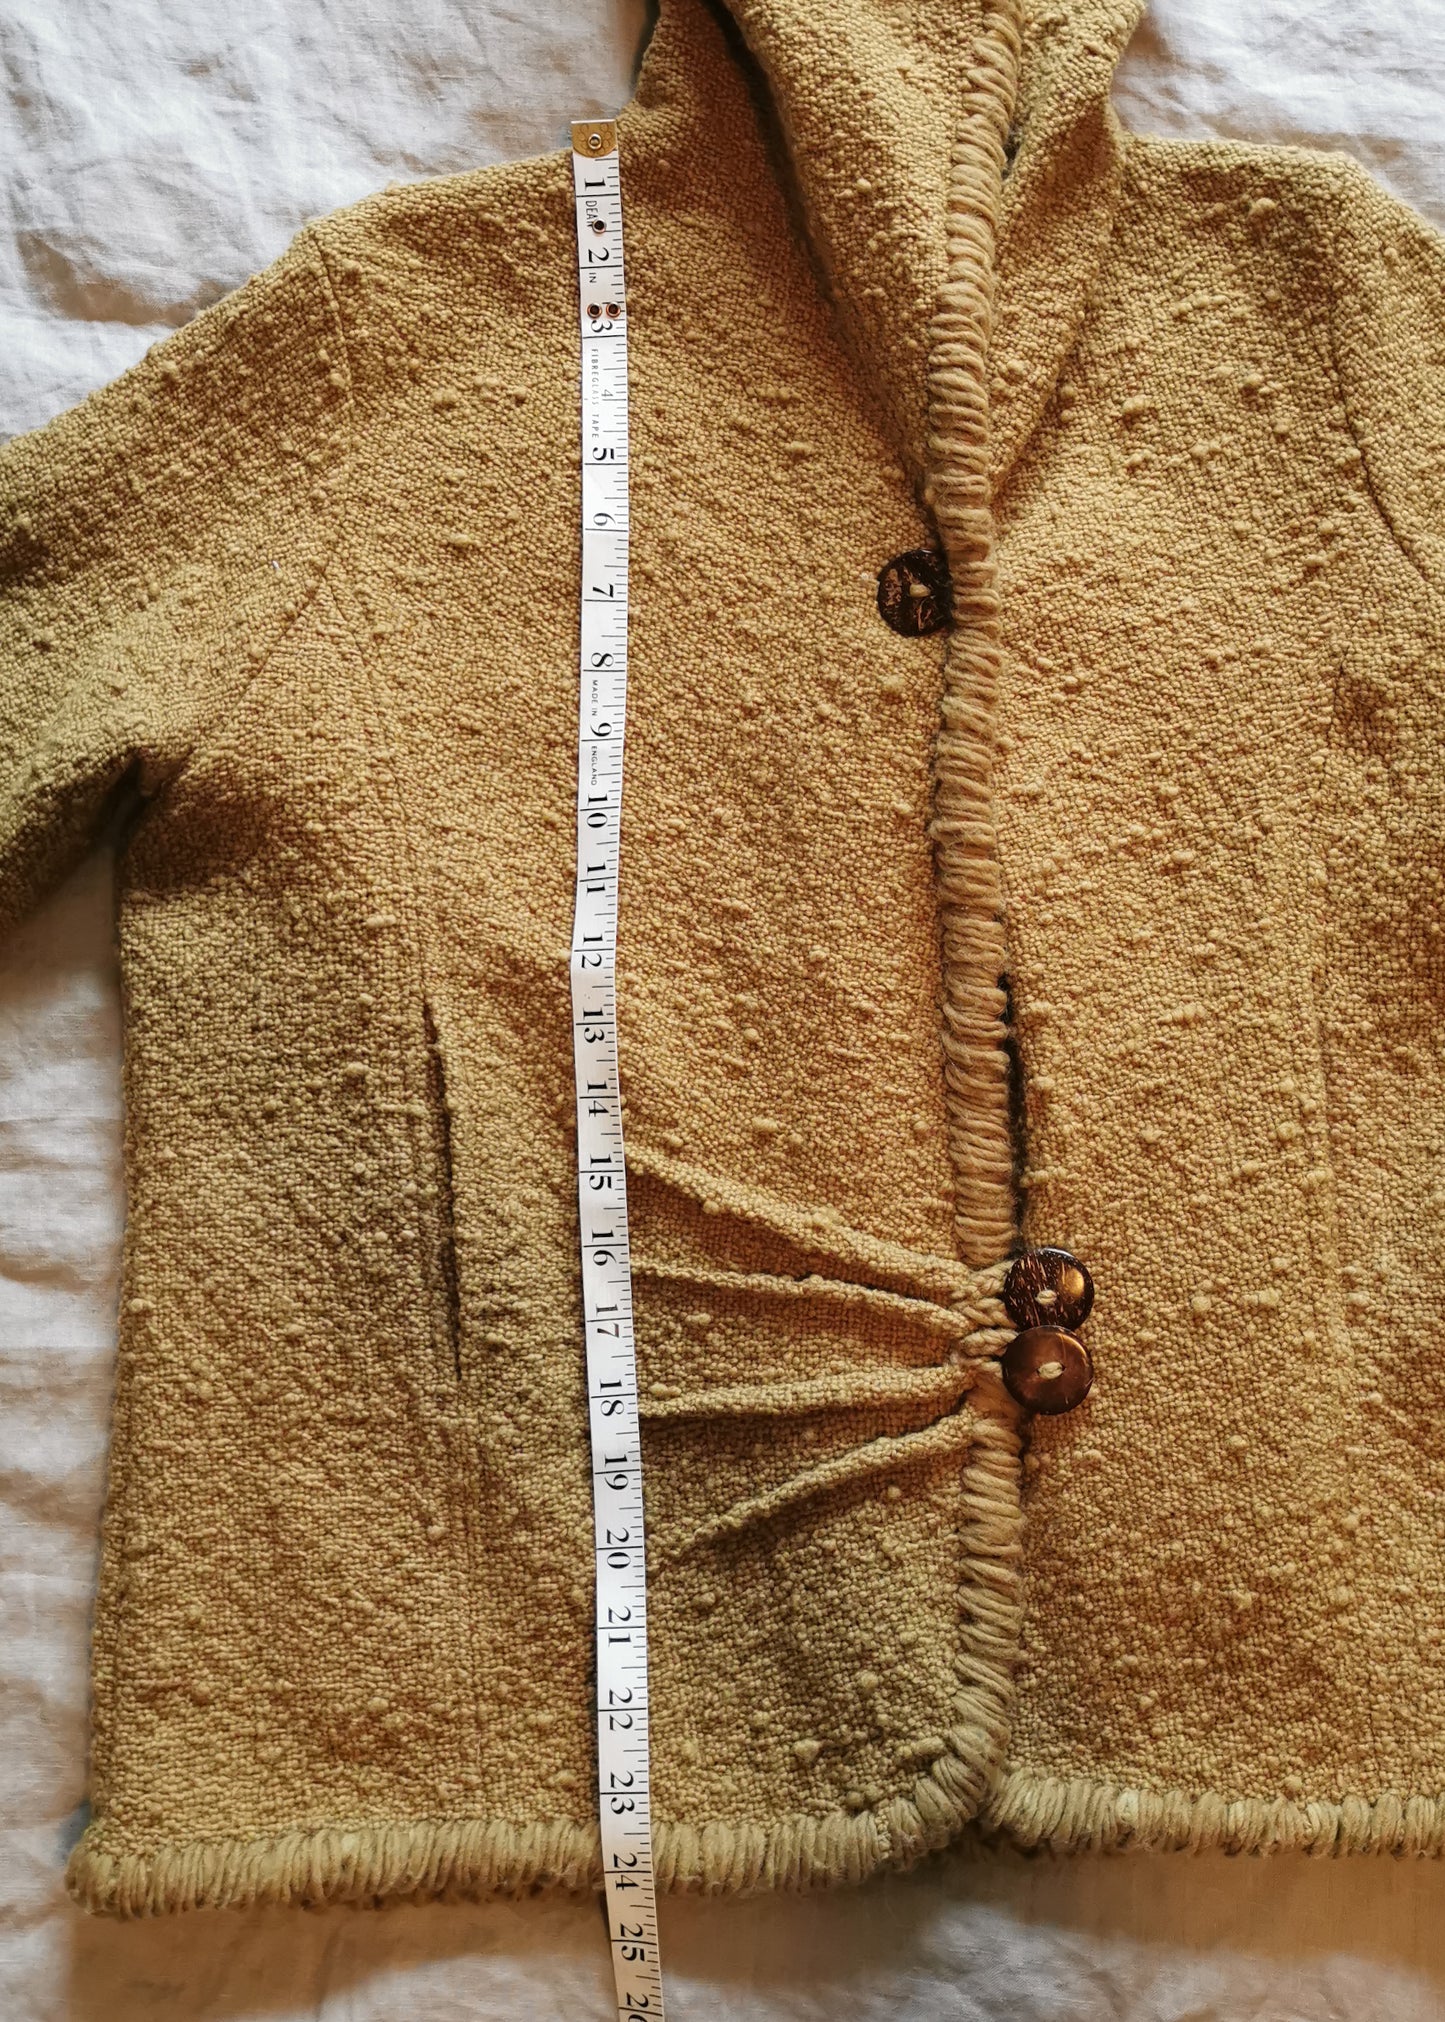 World Folk Art Wool Sweater Jacket (L)